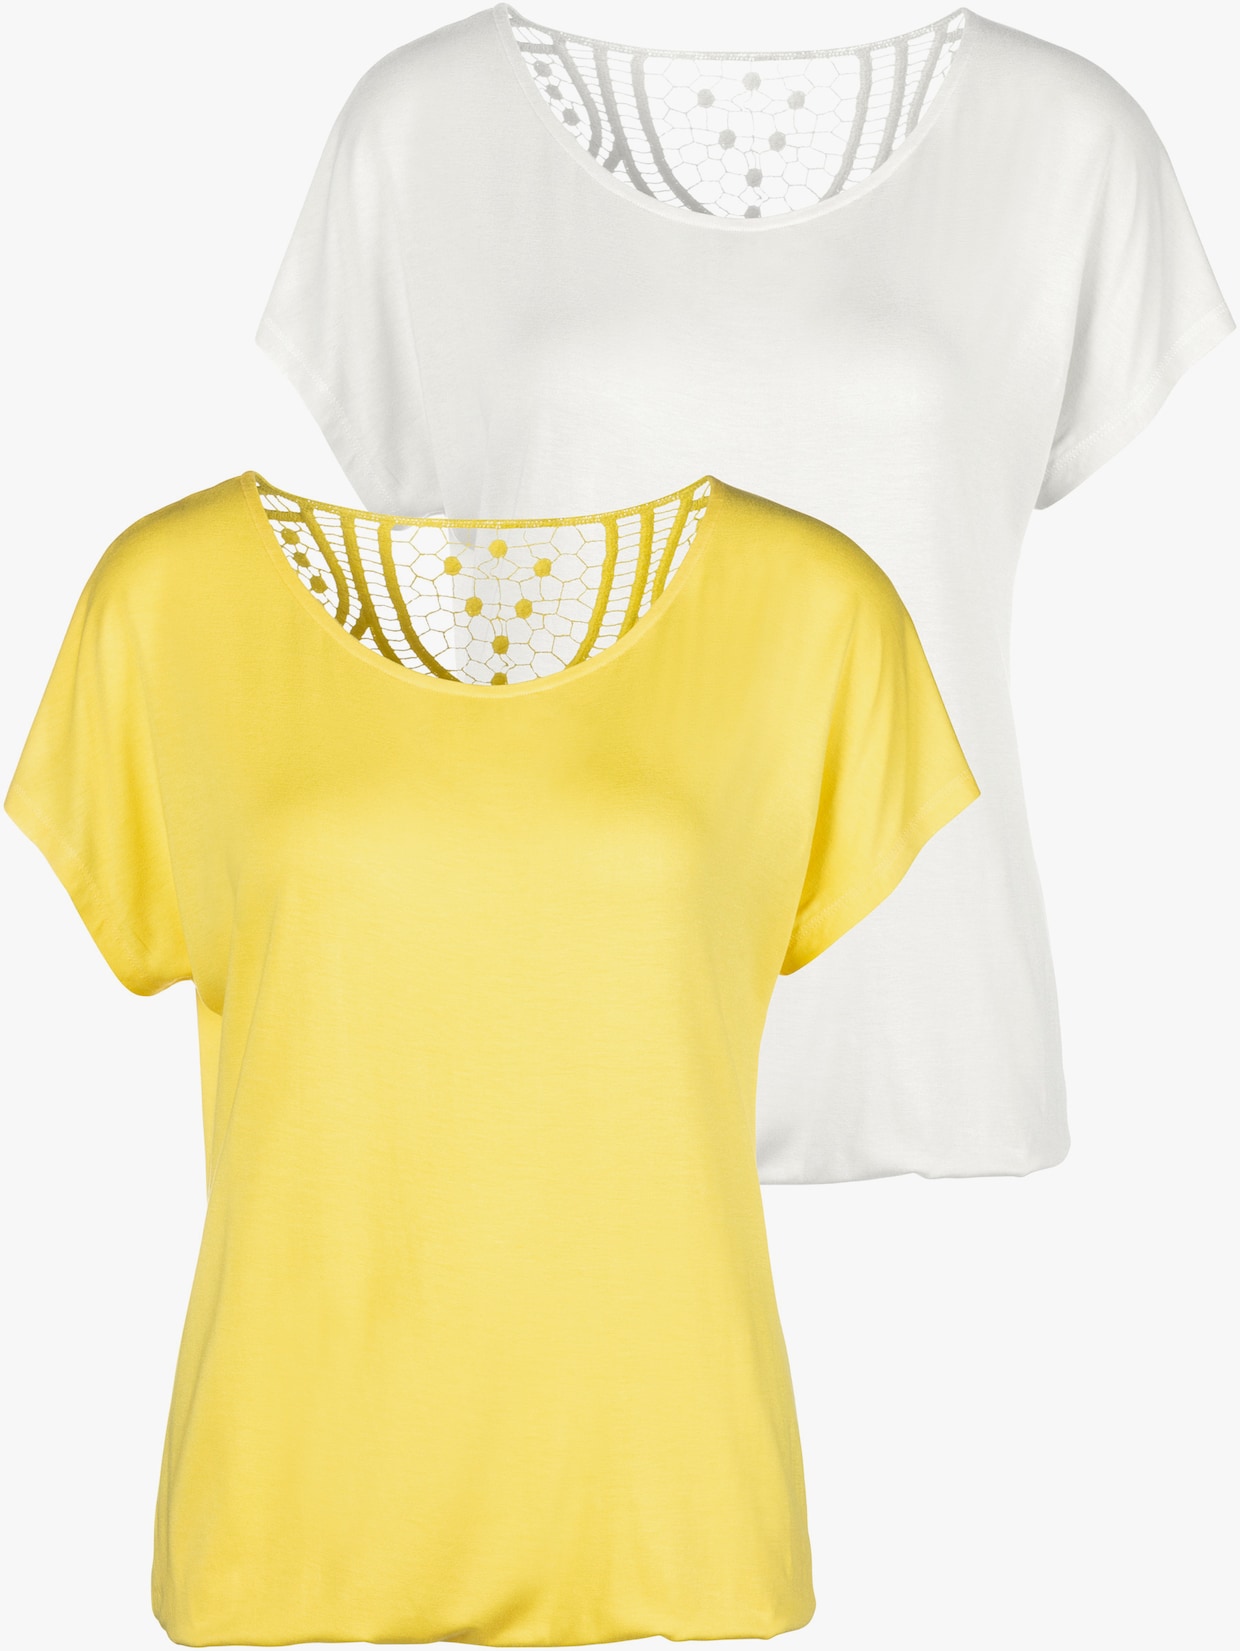 Vivance T-Shirt - gelb, creme